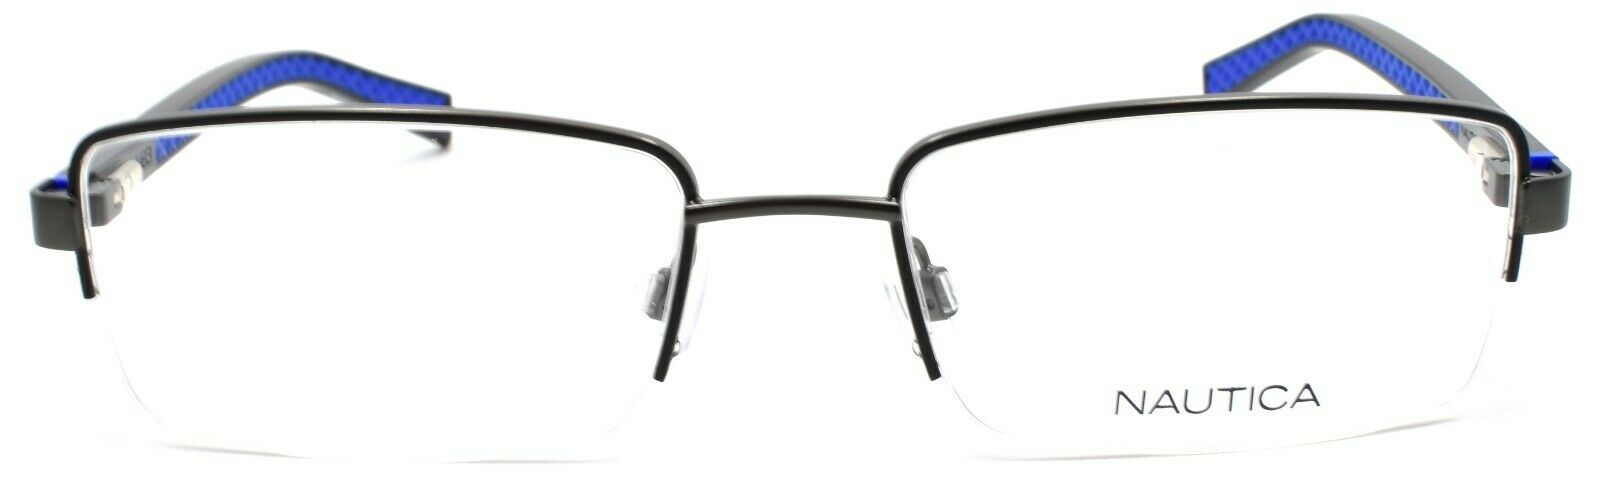 2-Nautica N7309 005 Men's Eyeglasses Frames Half-rim 54-18-140 Matte Black-688940464085-IKSpecs